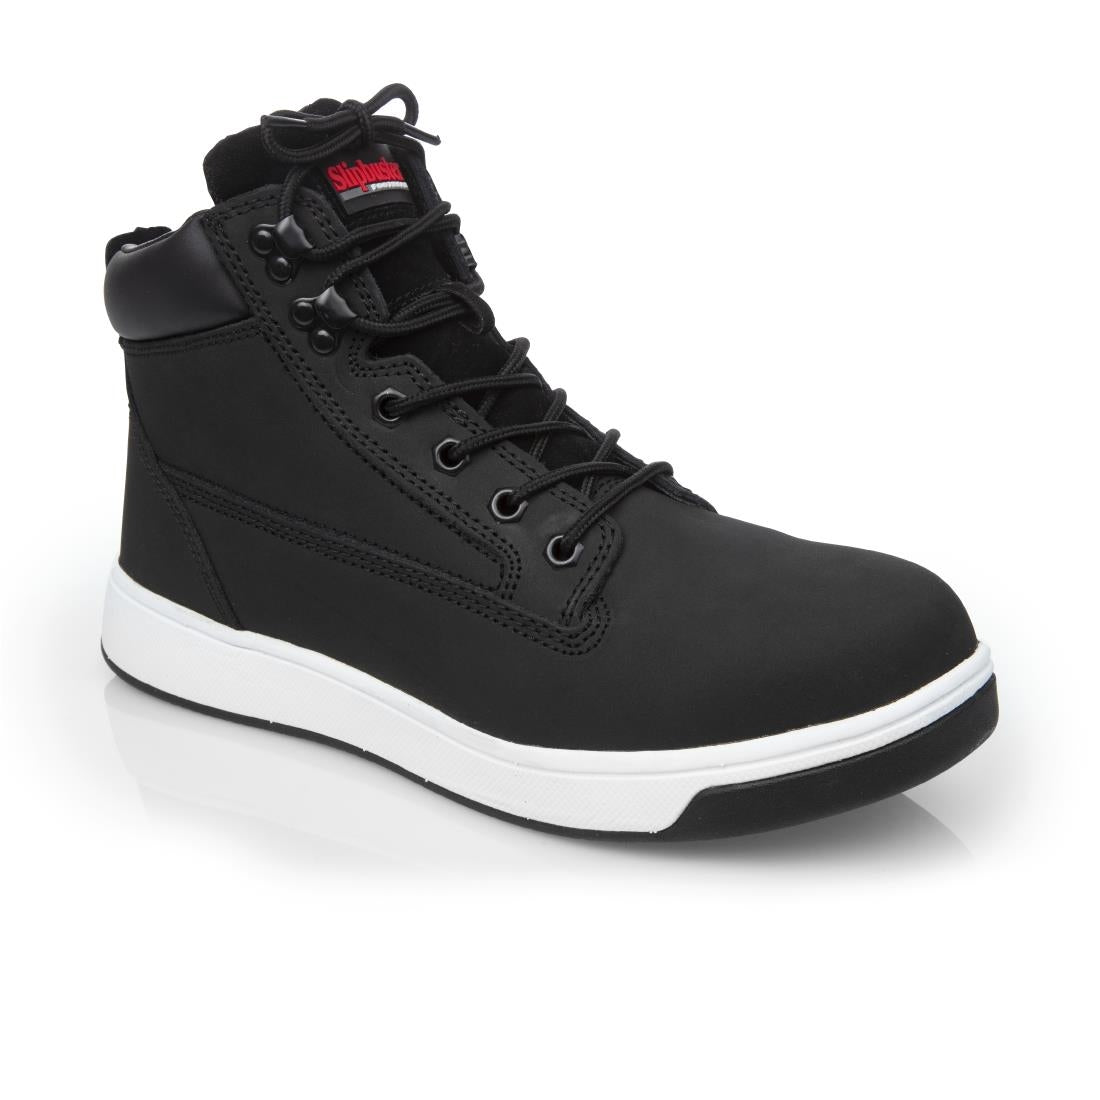 BB422-42 Slipbuster Sneaker Boots Black 42 JD Catering Equipment Solutions Ltd